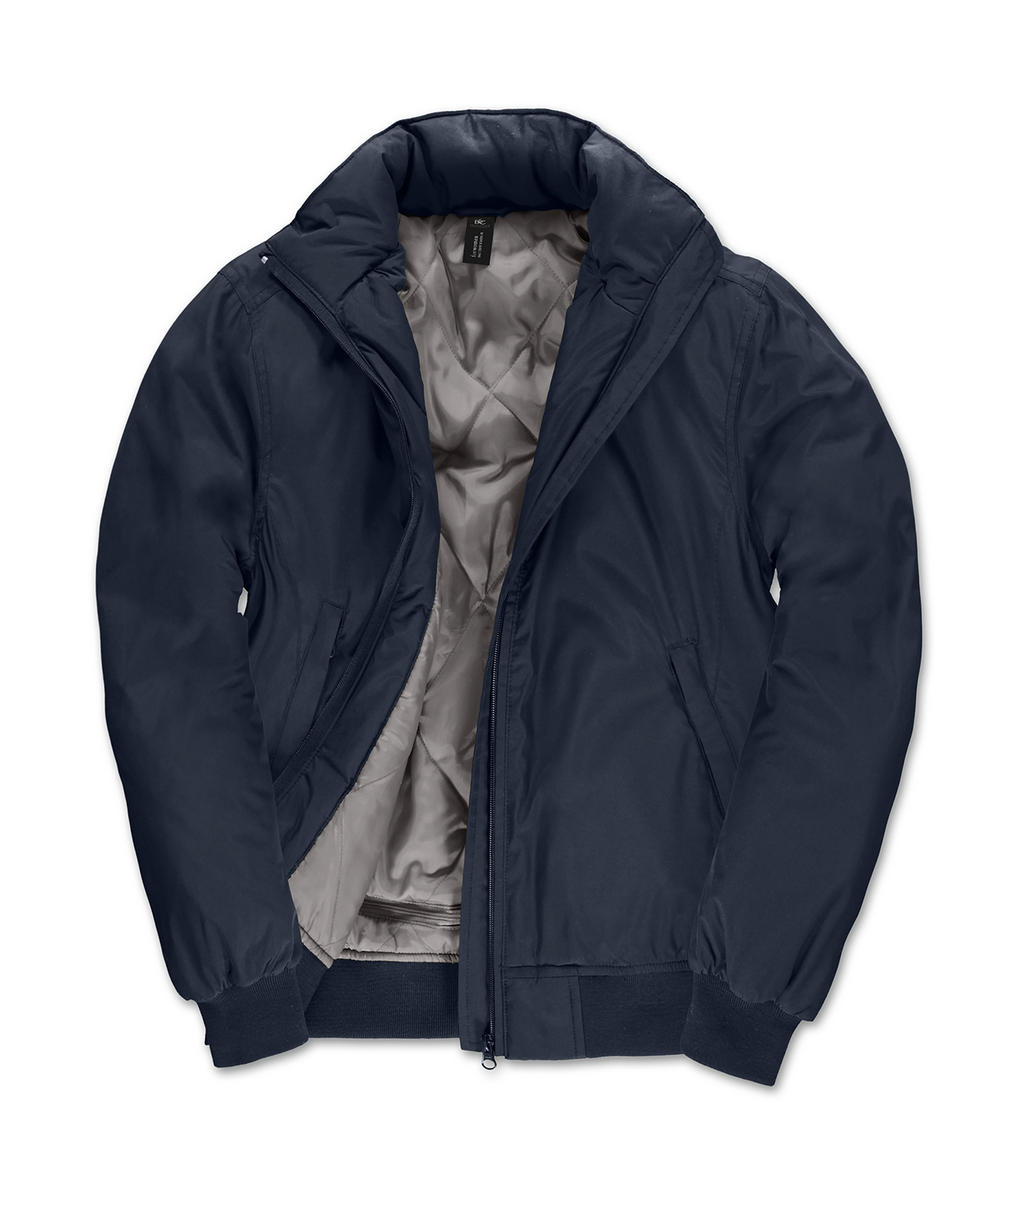  Crew Bomber/women Jacket in Farbe Navy/Warm Grey